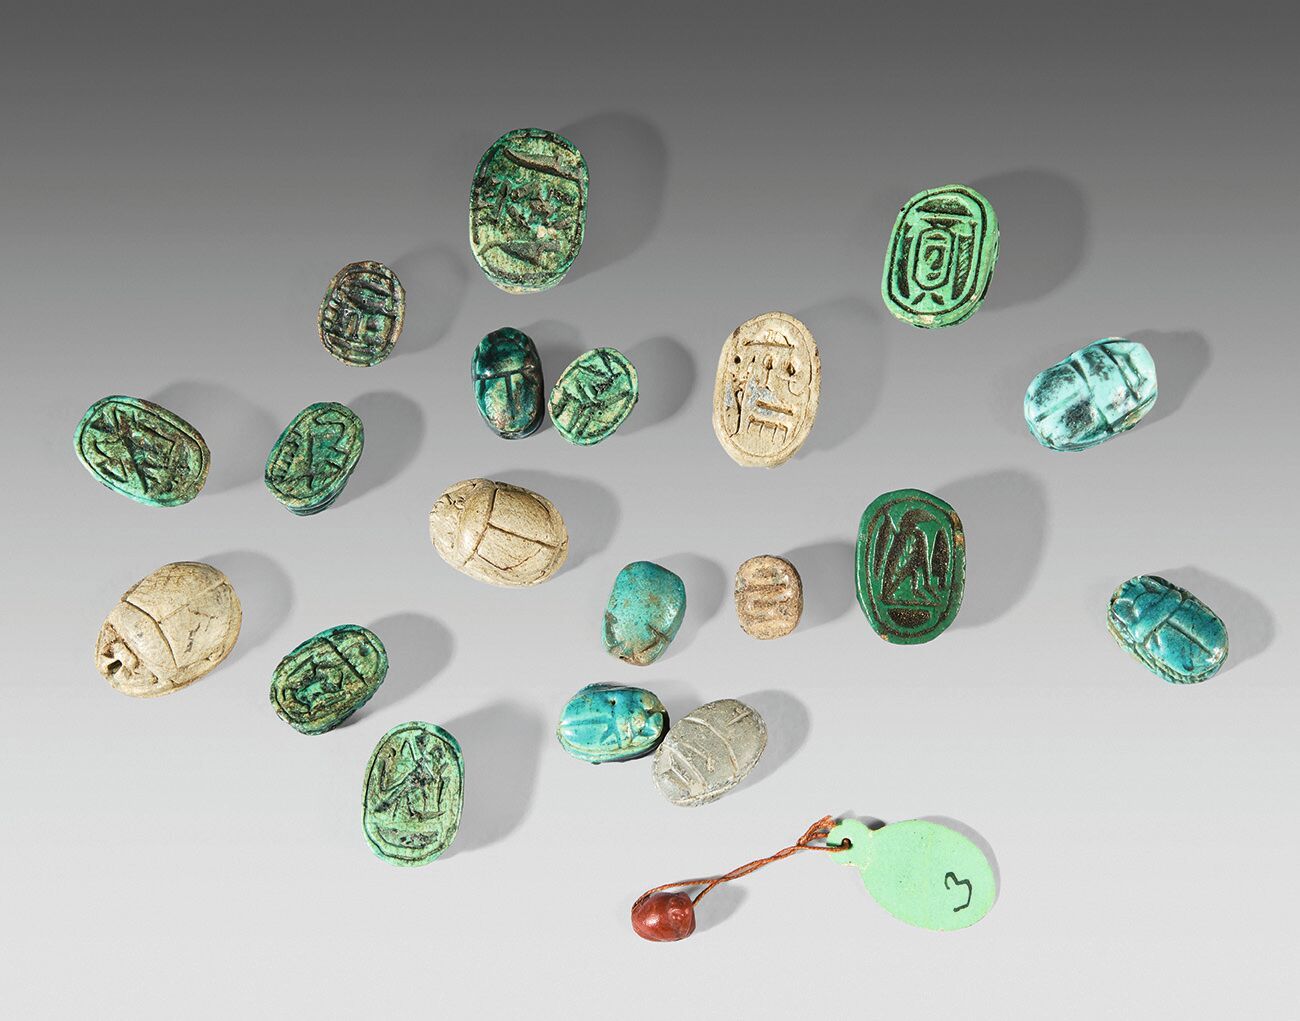 Null 十九只甲虫和一只青蛙
皂石、陶器和红碧玉。
埃及，部分来自古代时期。